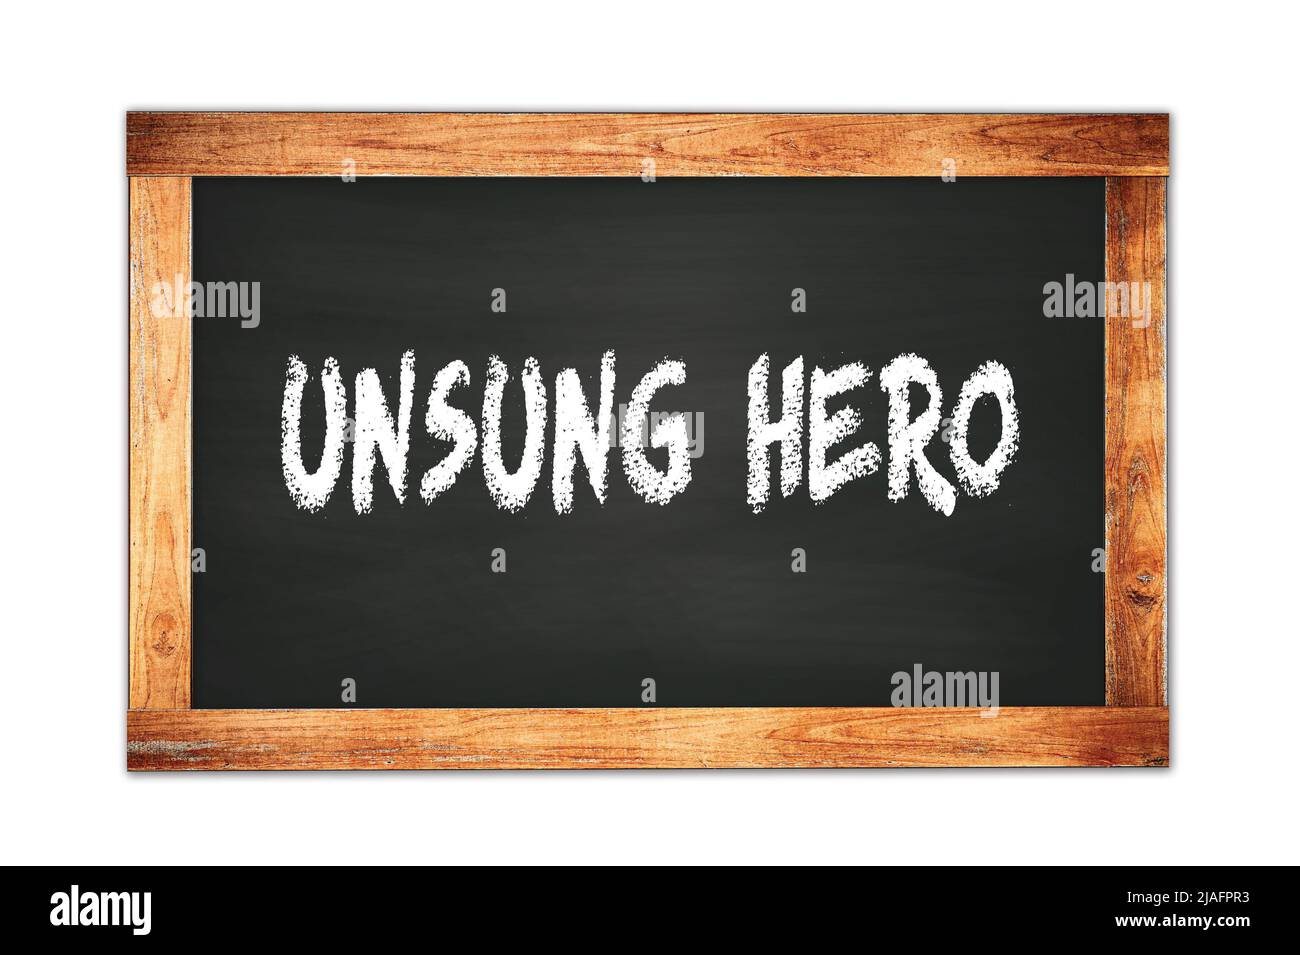 UNSUNG  HERO text written on black wooden frame school blackboard. Stock Photo